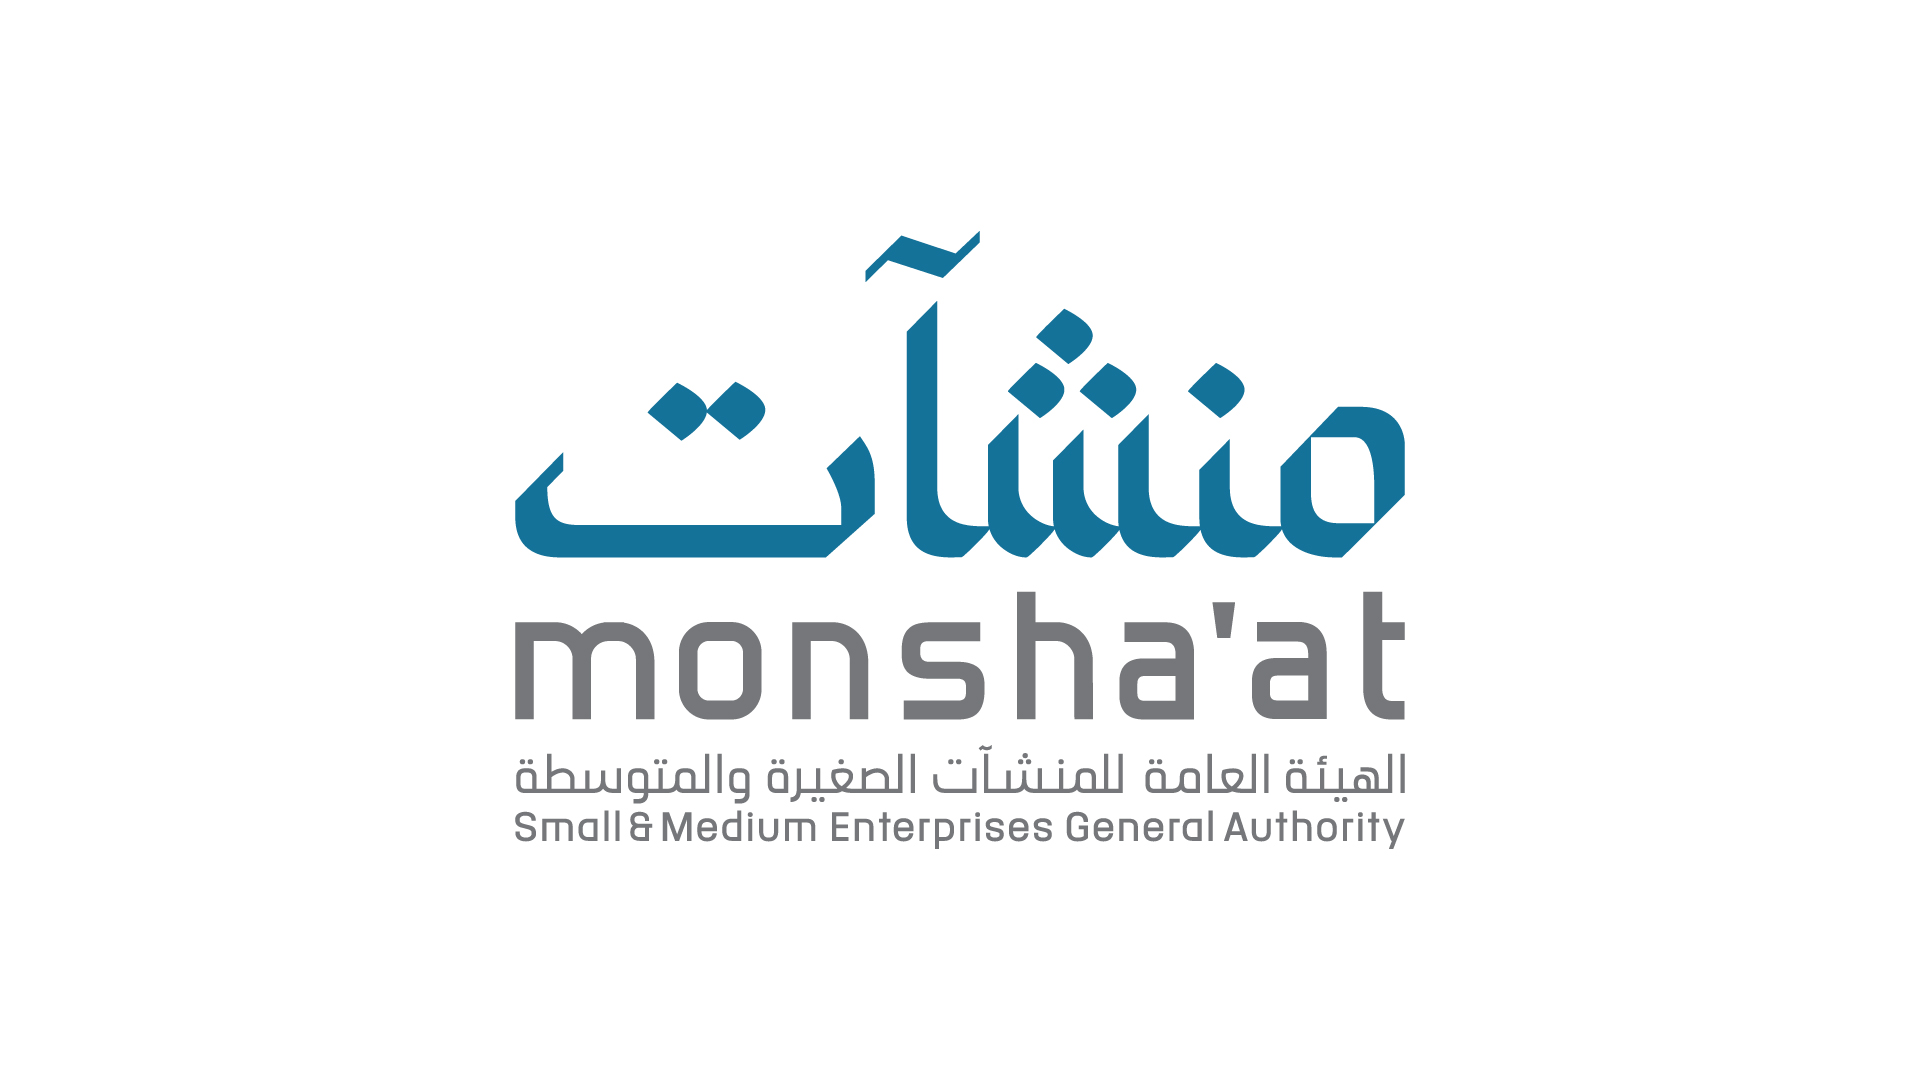 Monshaat Logo (Saudi SME General Authority)